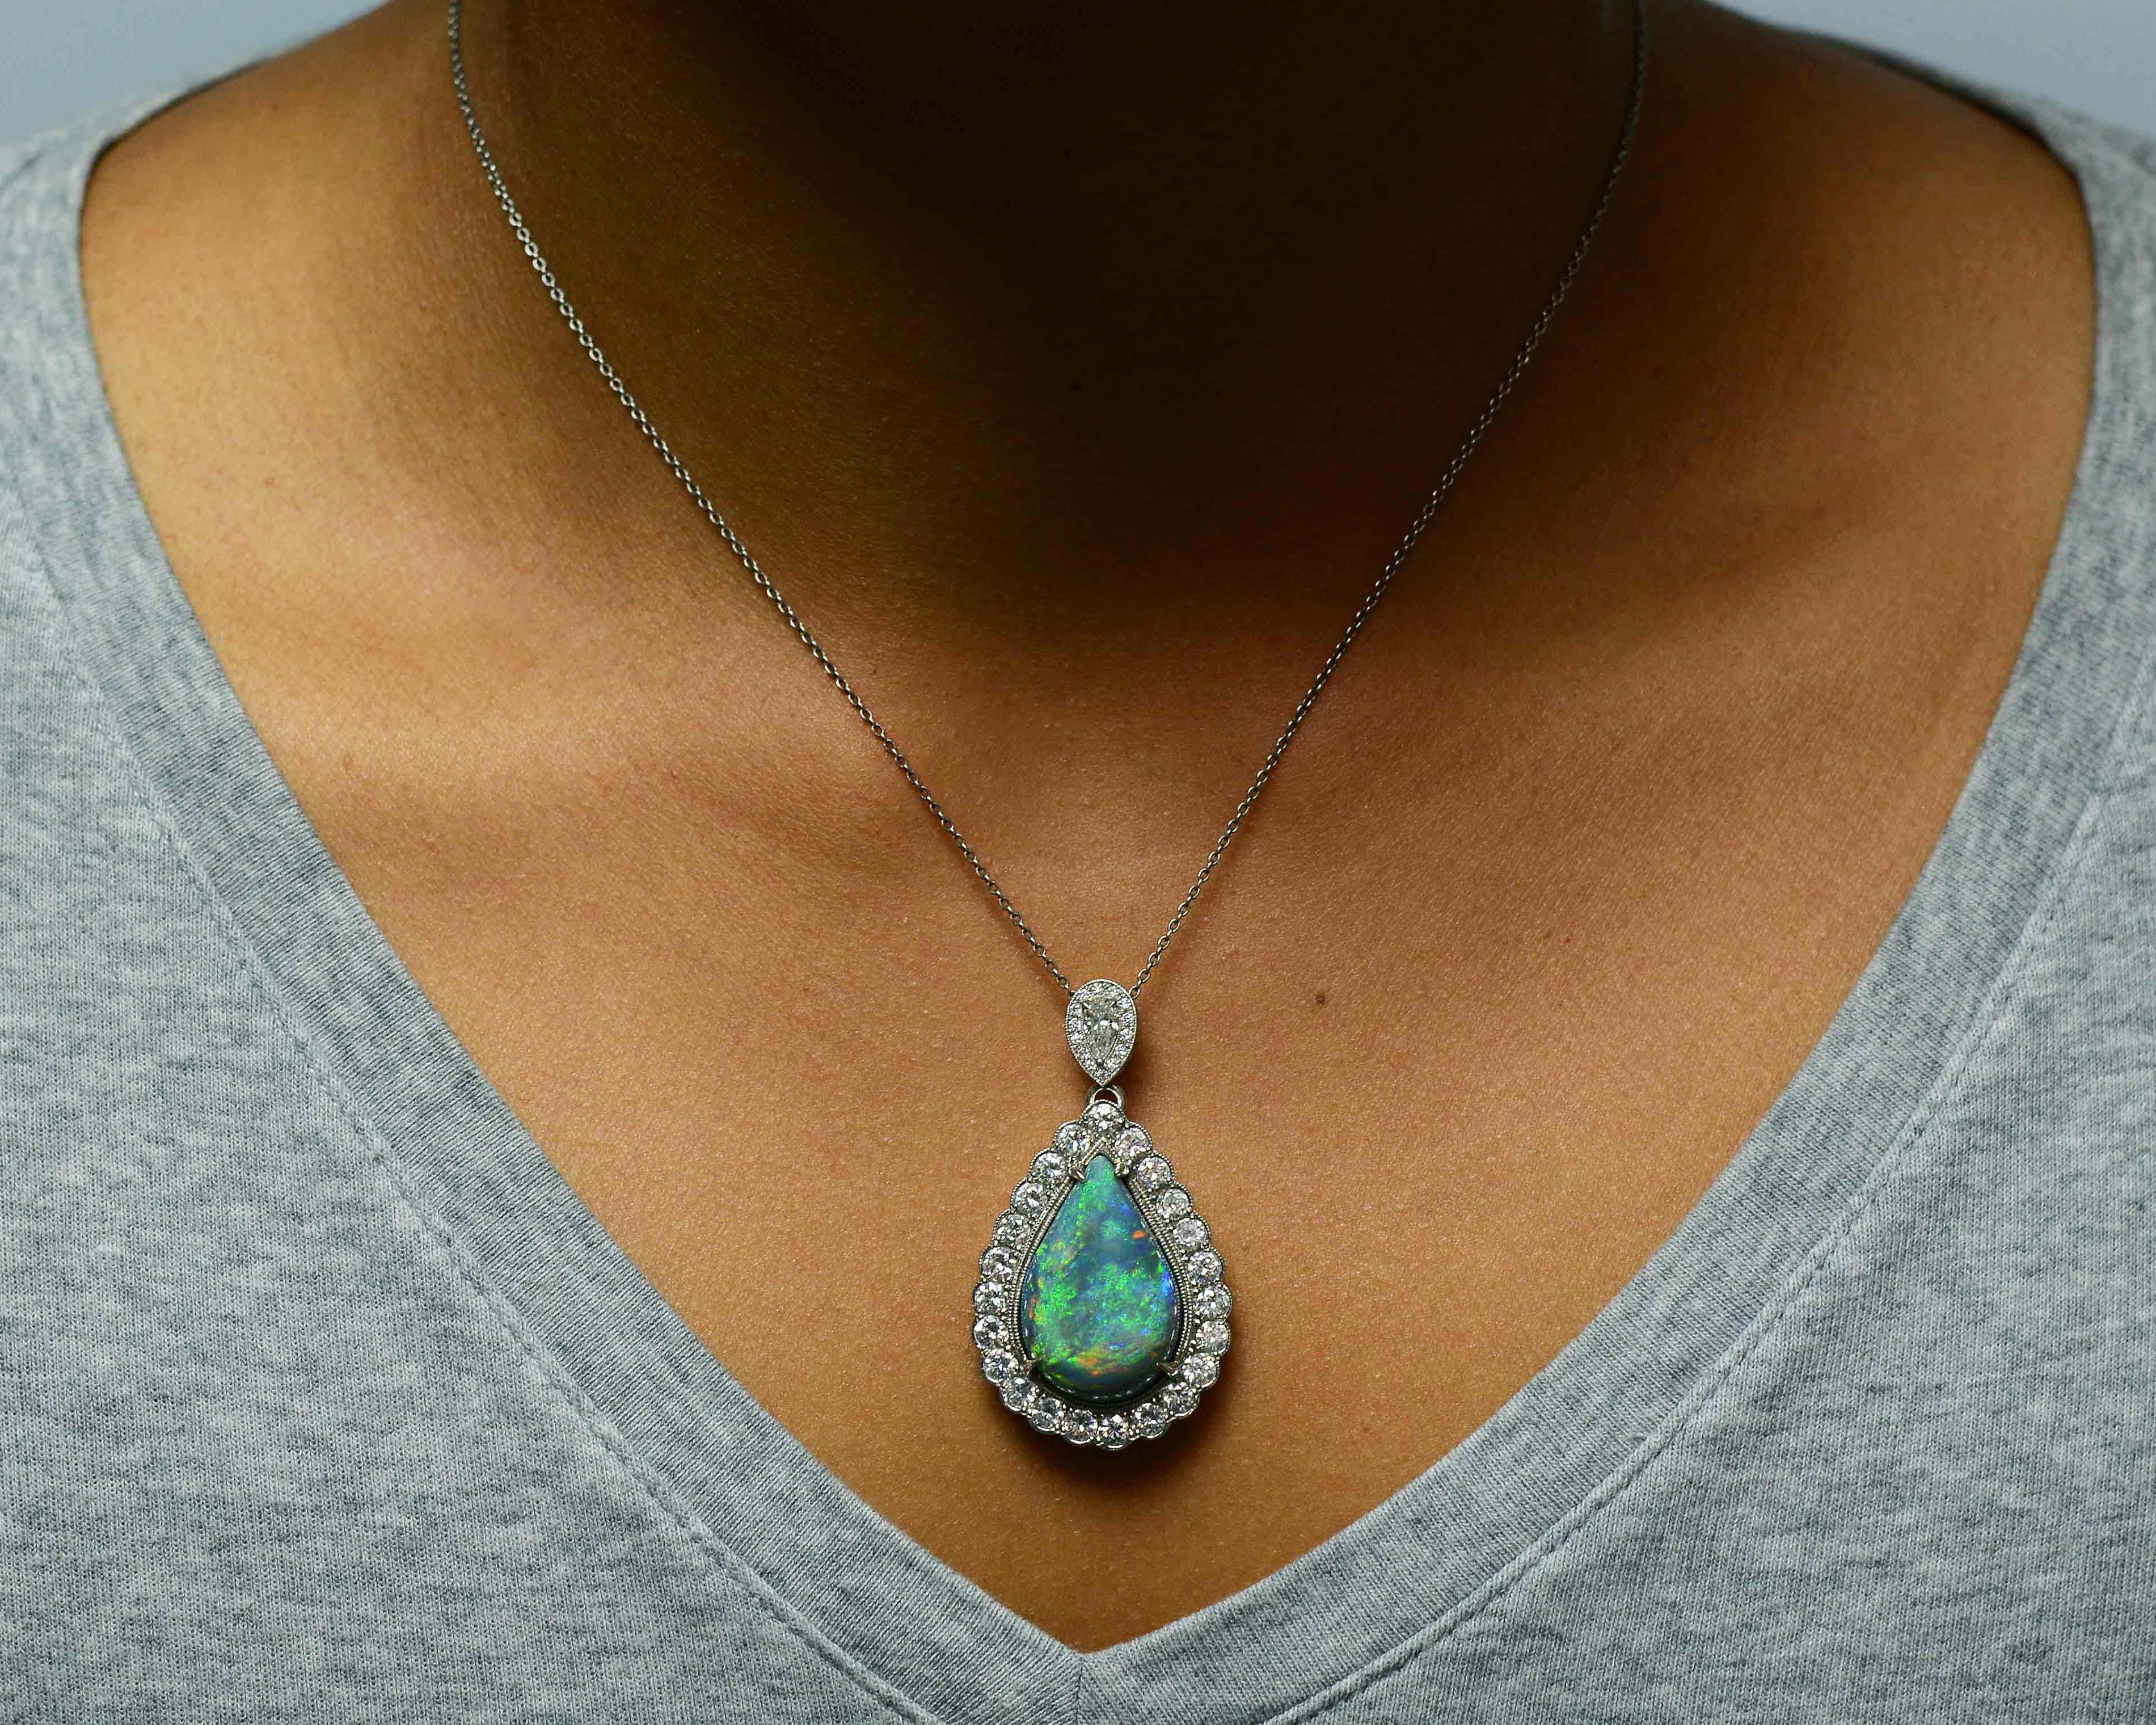 15 carats Australian black opal diamond pendant necklace.